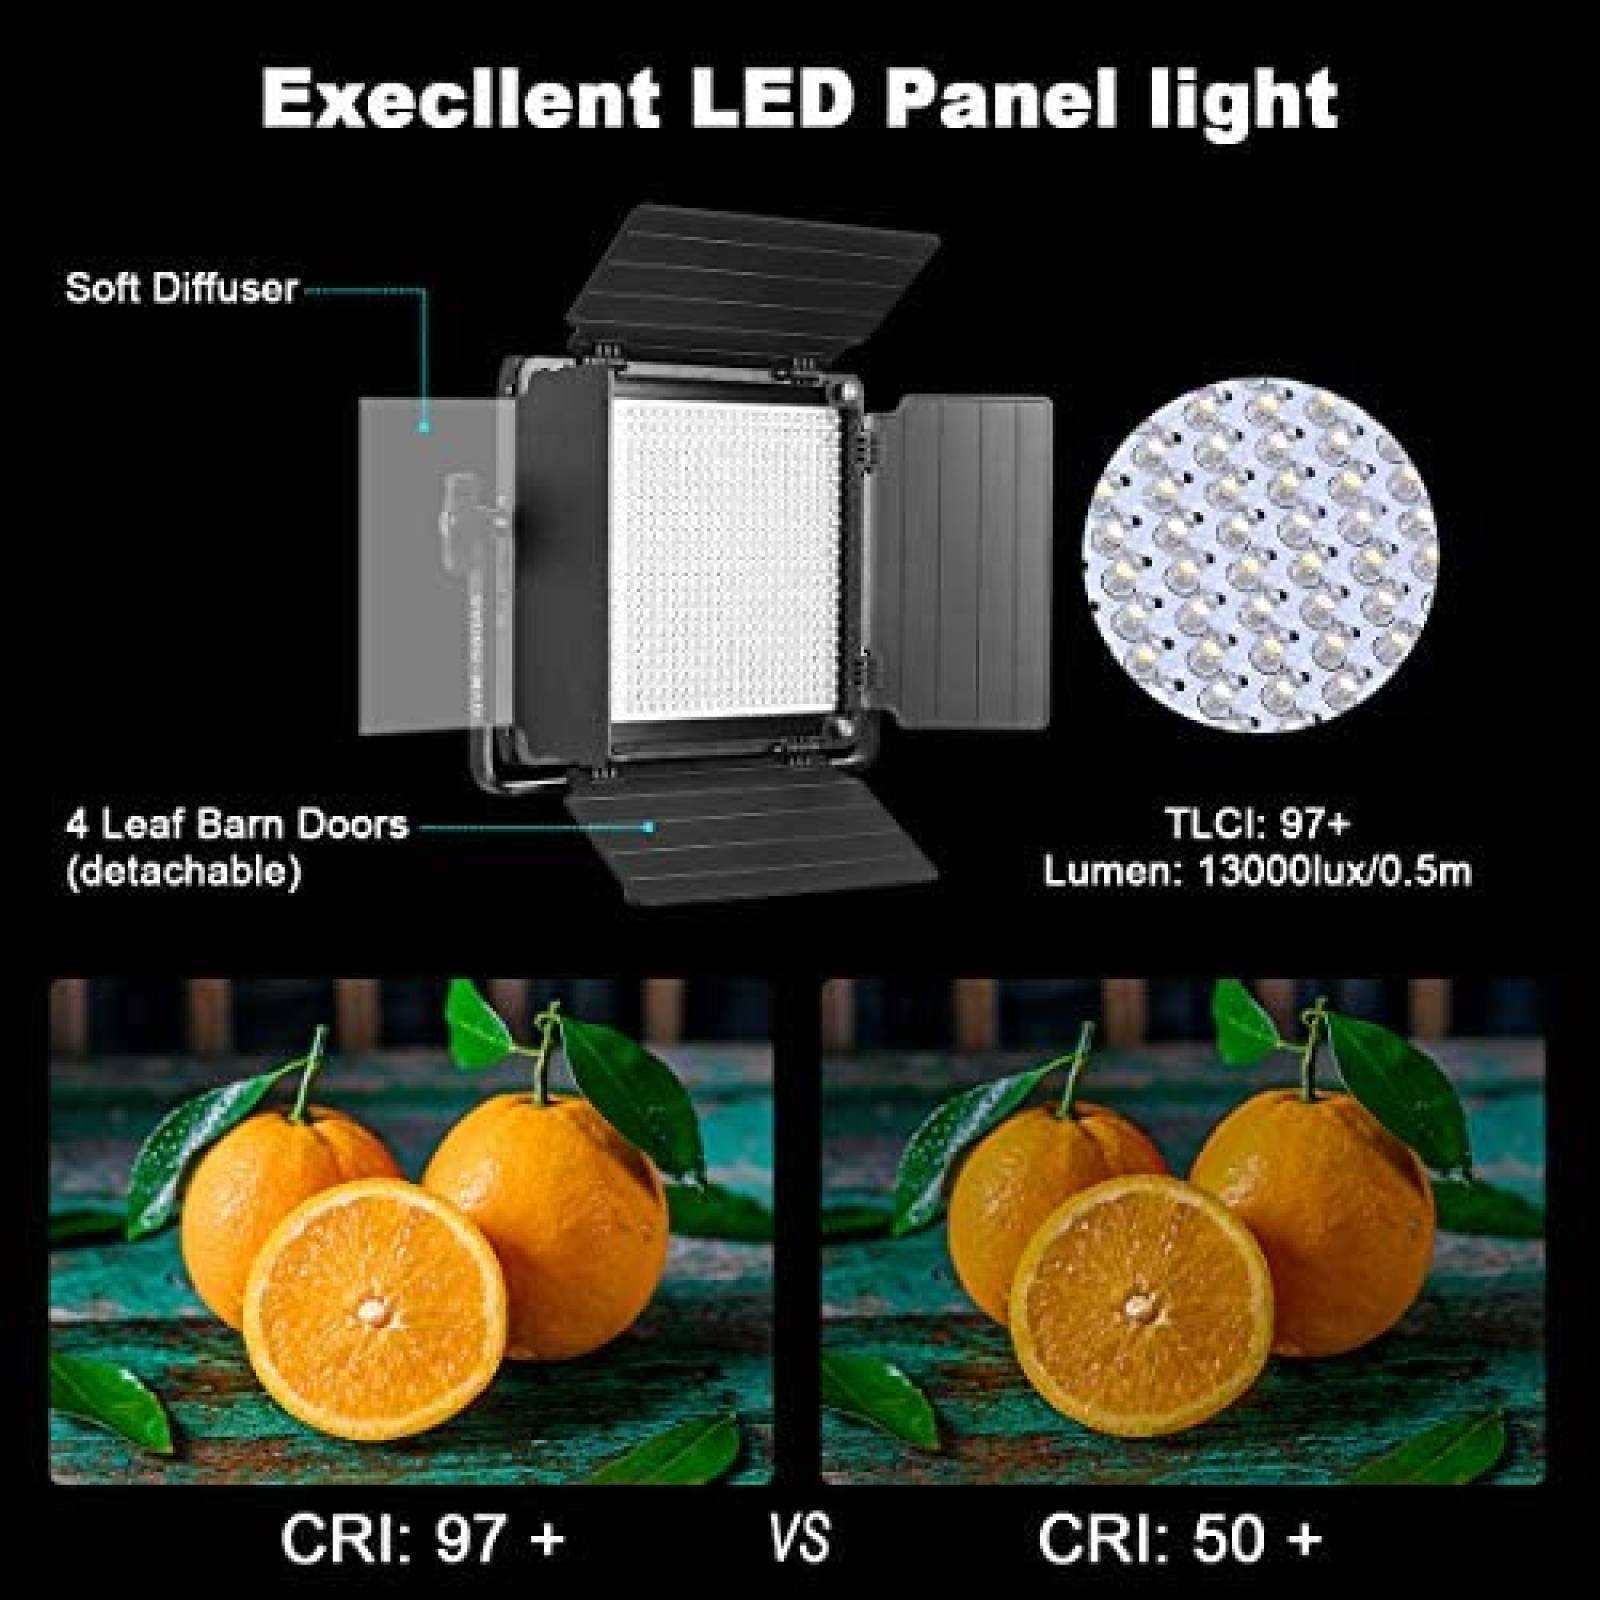 Kit de Iluminación GVM Great Video Maker 3 Lámparas LED